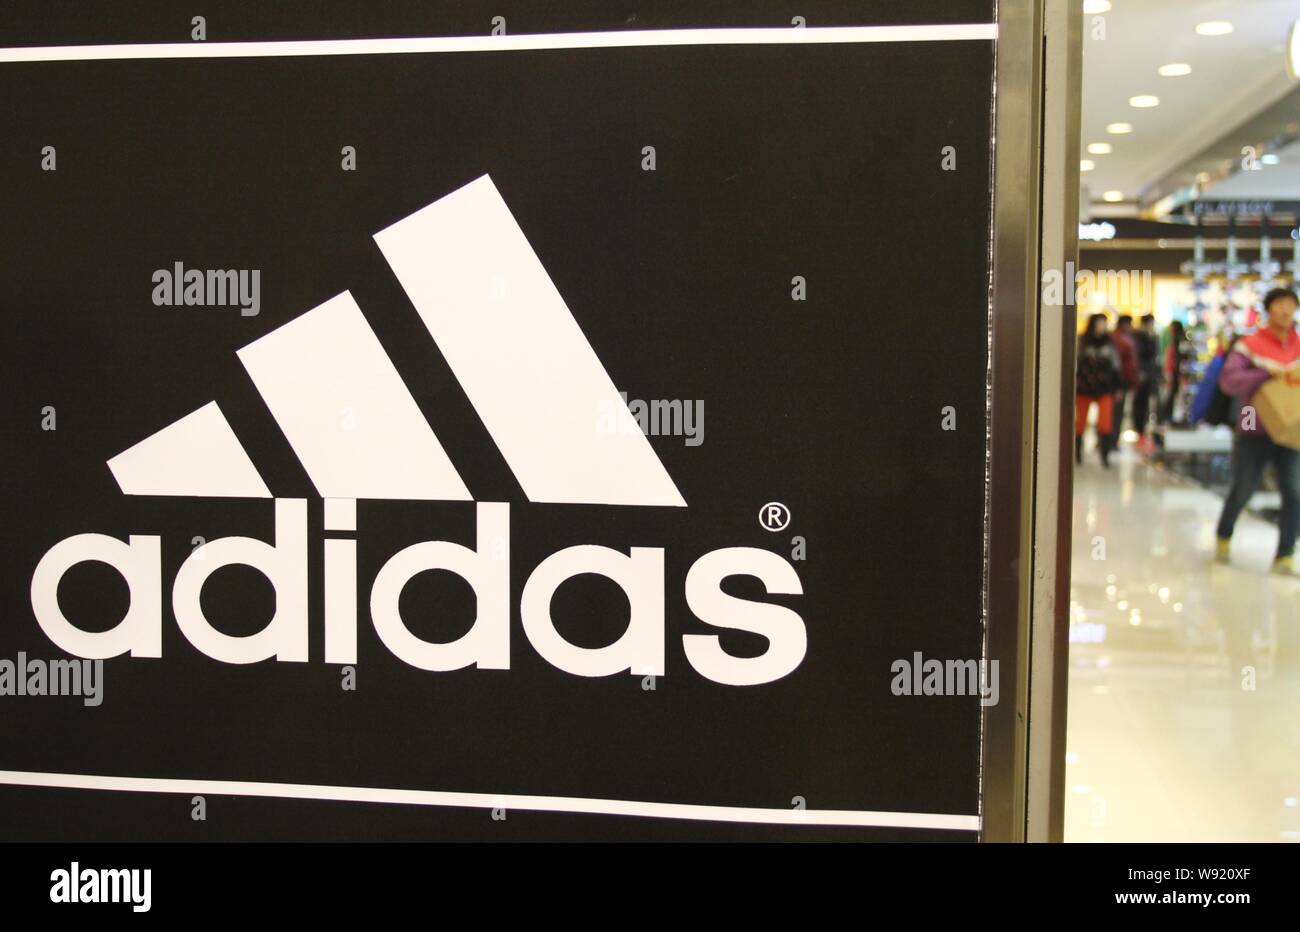 Adidas Logo Immagini e Fotos Stock - Pagina 6 - Alamy